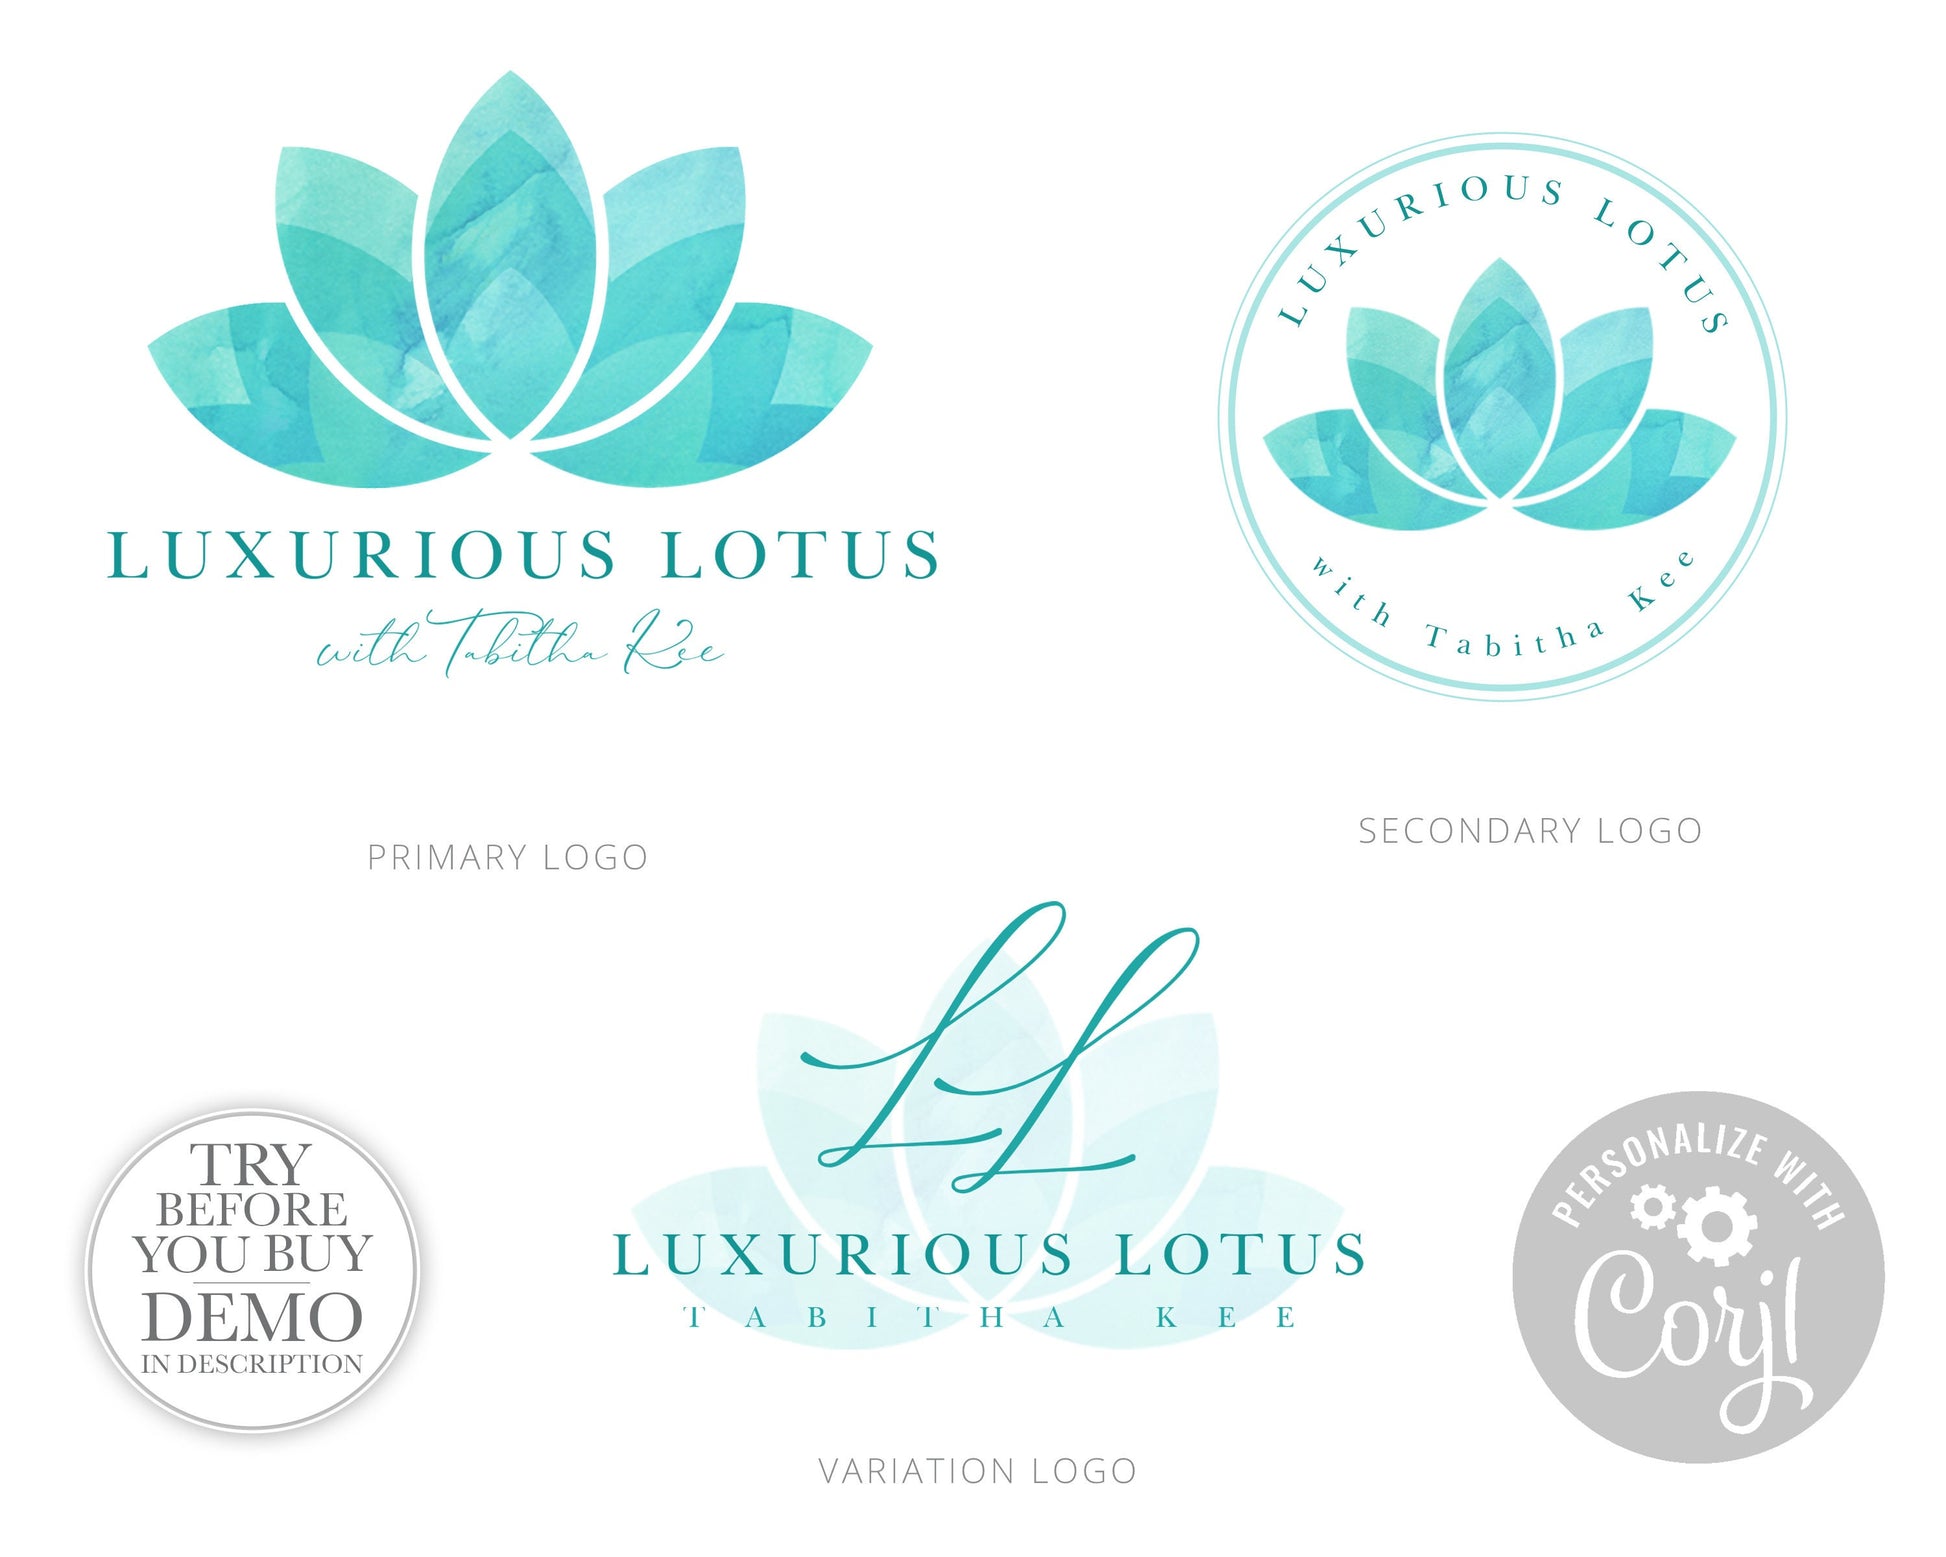 DIY 8pc Maxi Branding Kit Watercolor Lotus Spa Instant Download Logo Design  | DIY Editable Template | Premade logo | Startup Kit LL-002